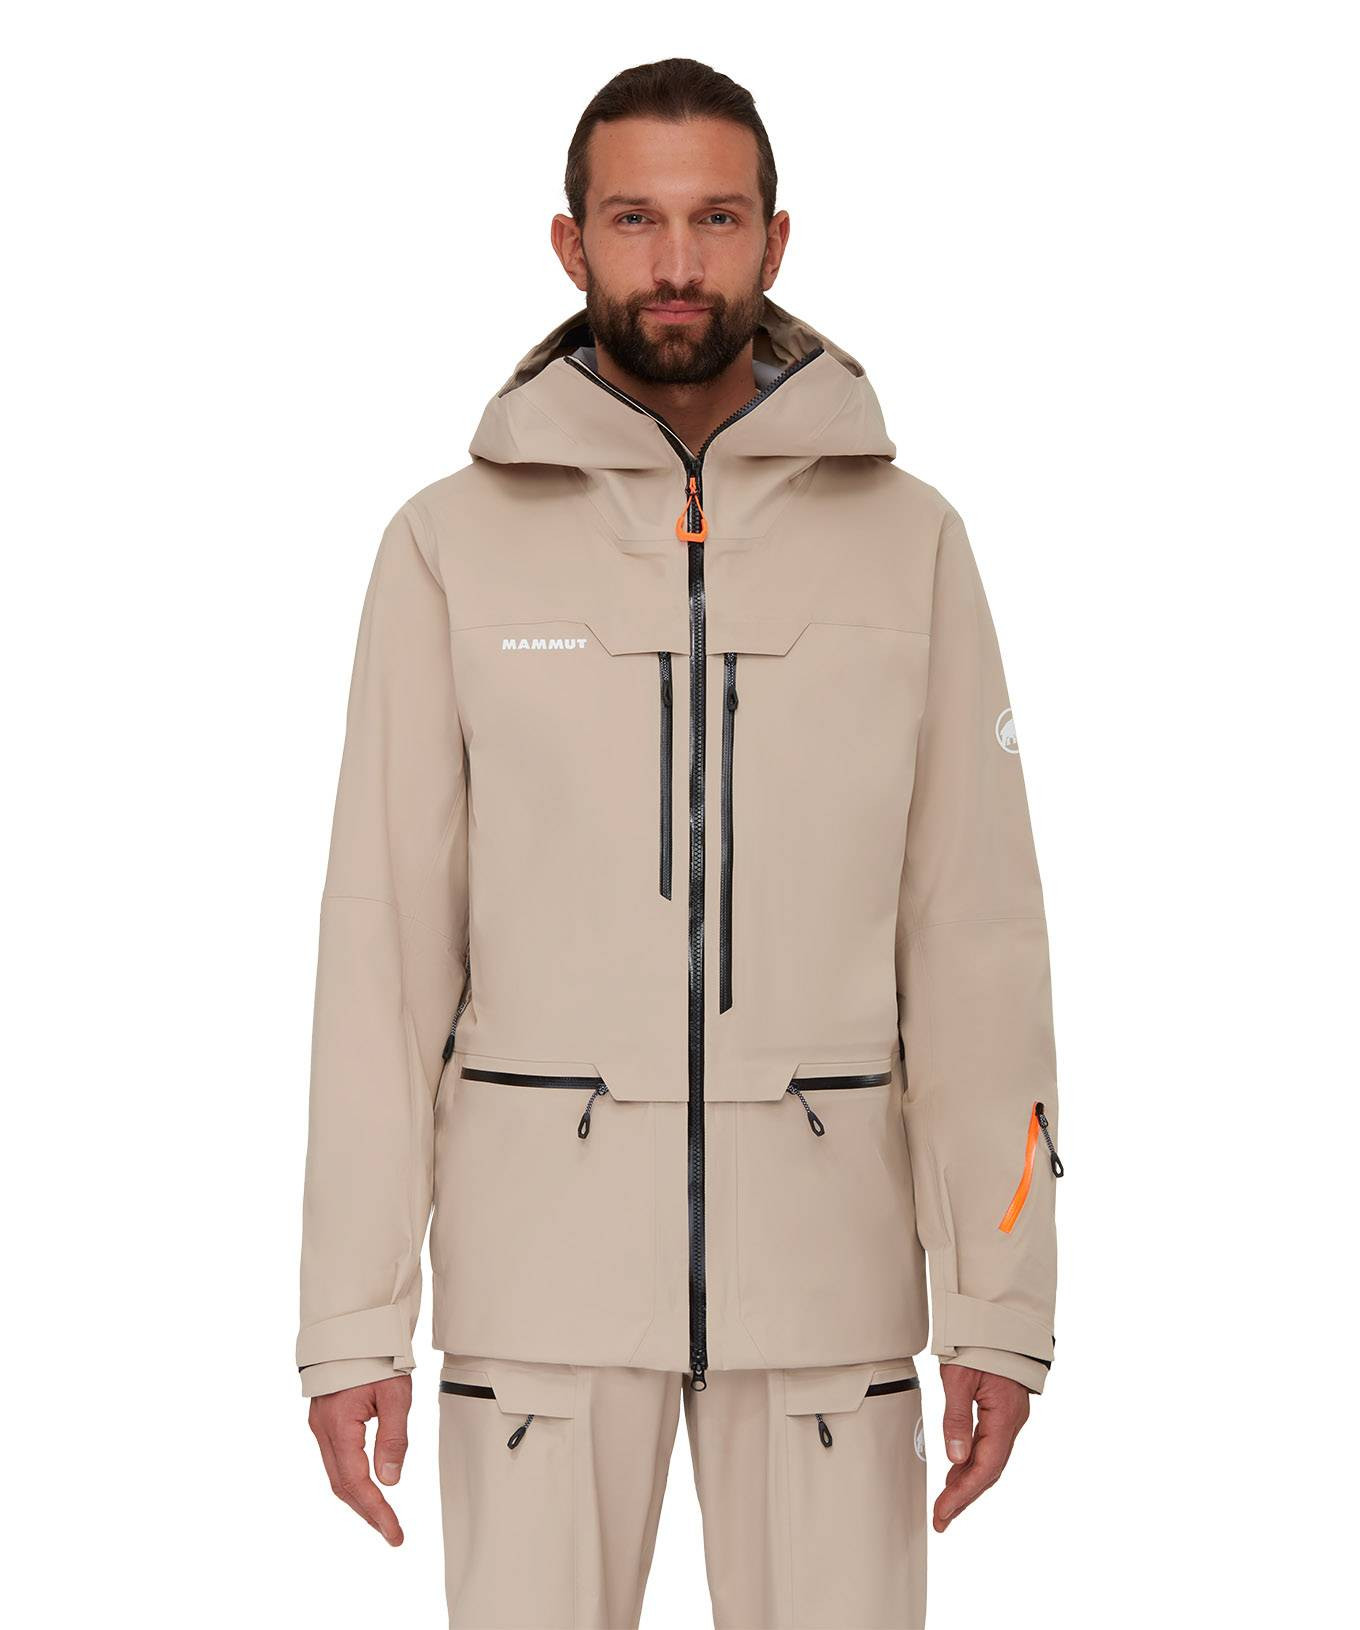 Men's ski jacket - Mammut - Snow Emotion, luxury ski store Paris